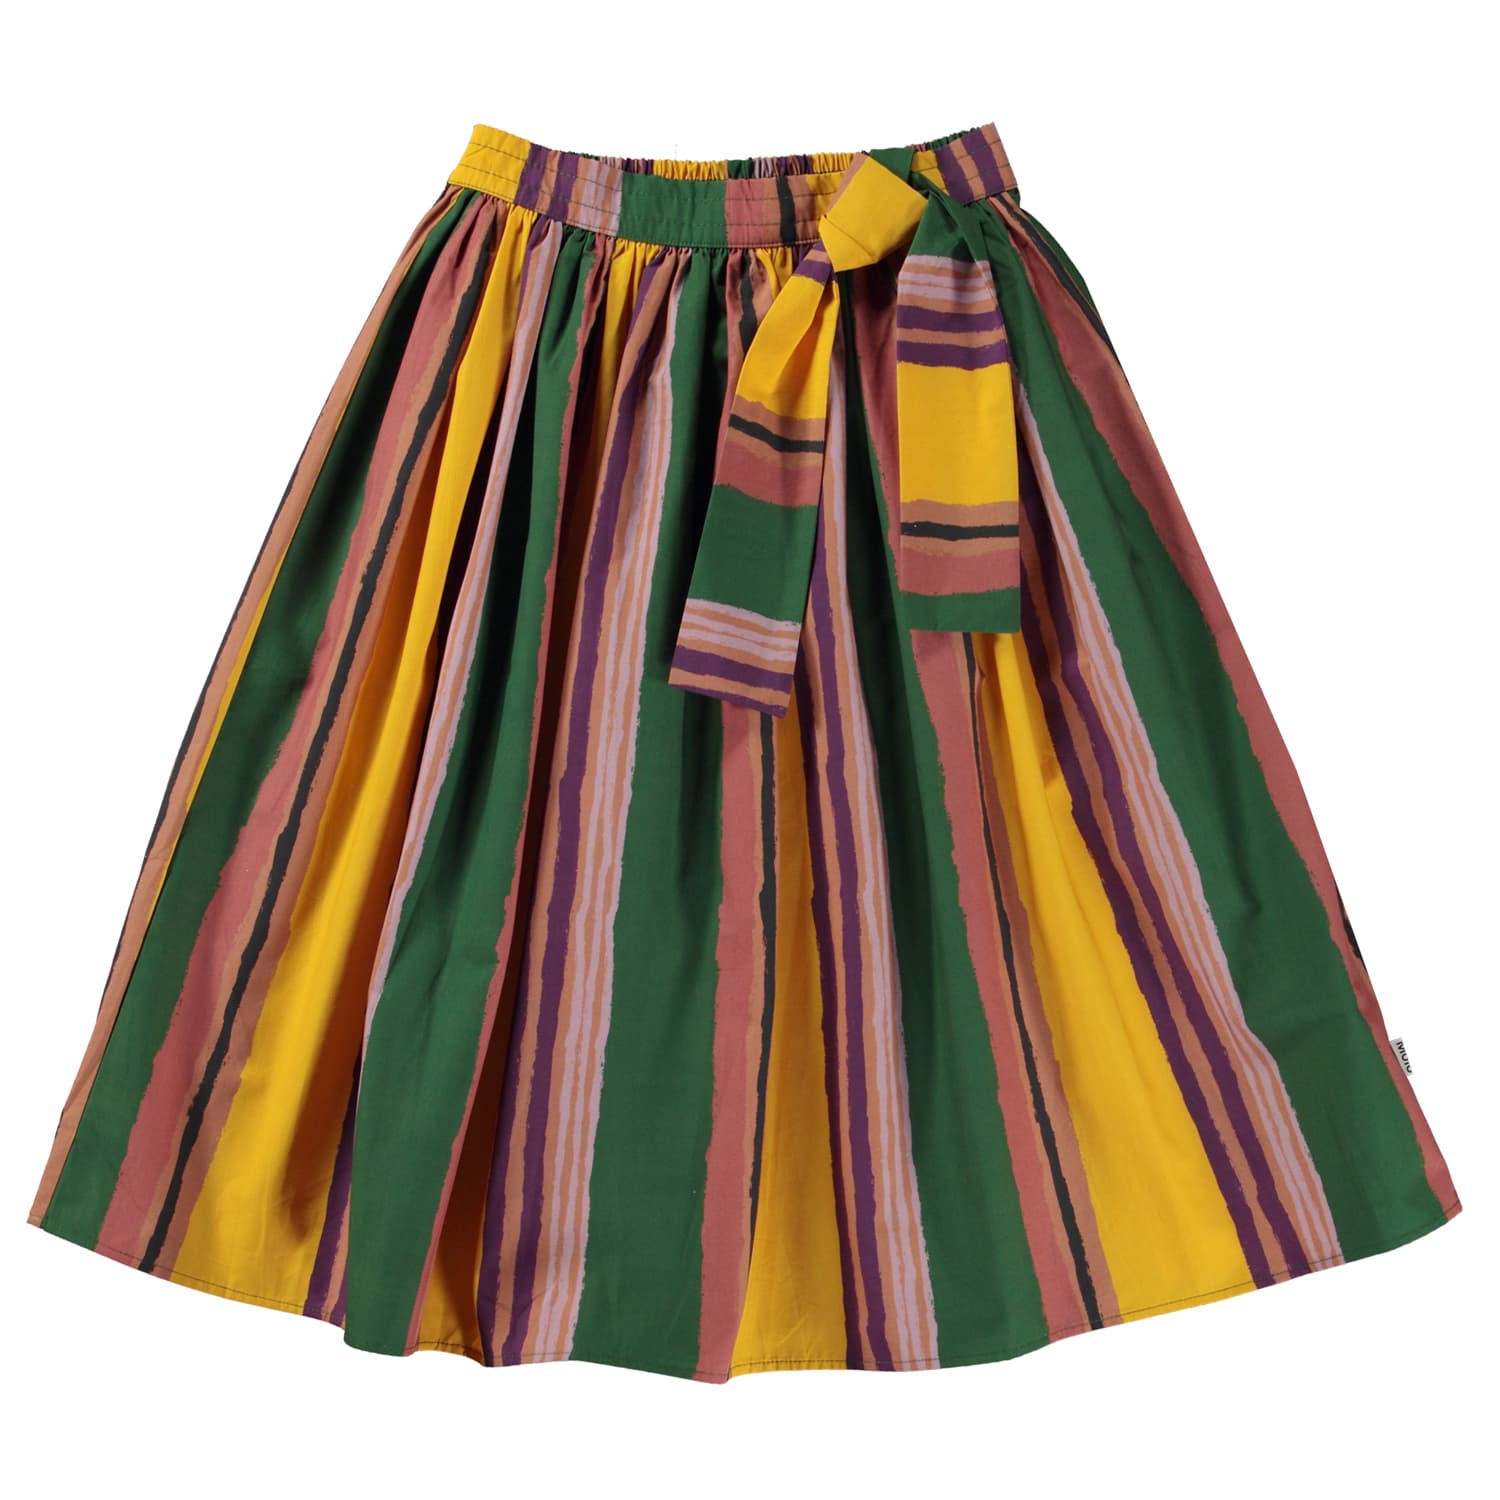 Bitta Skirt (Painted Stripes)